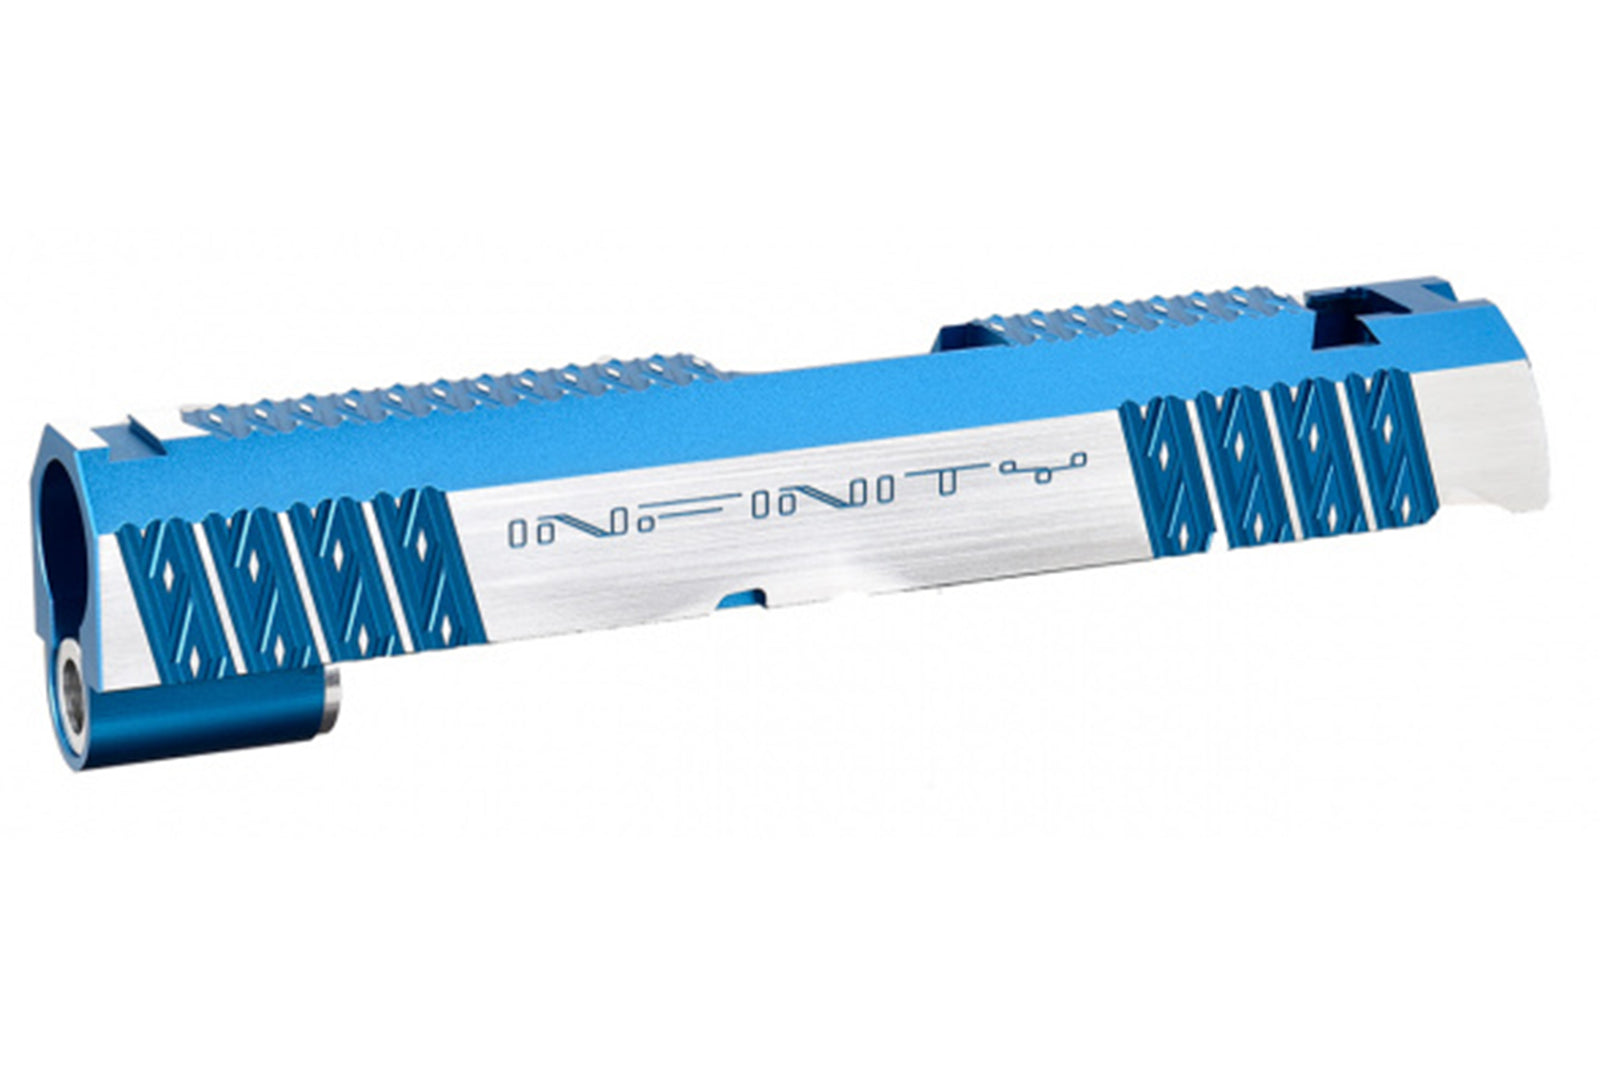 Airsoft Masterpiece Infinity Diamond Standard Slide for TM Hi-Capa 4.3 GBB Pistols (BLUE/SILVER)